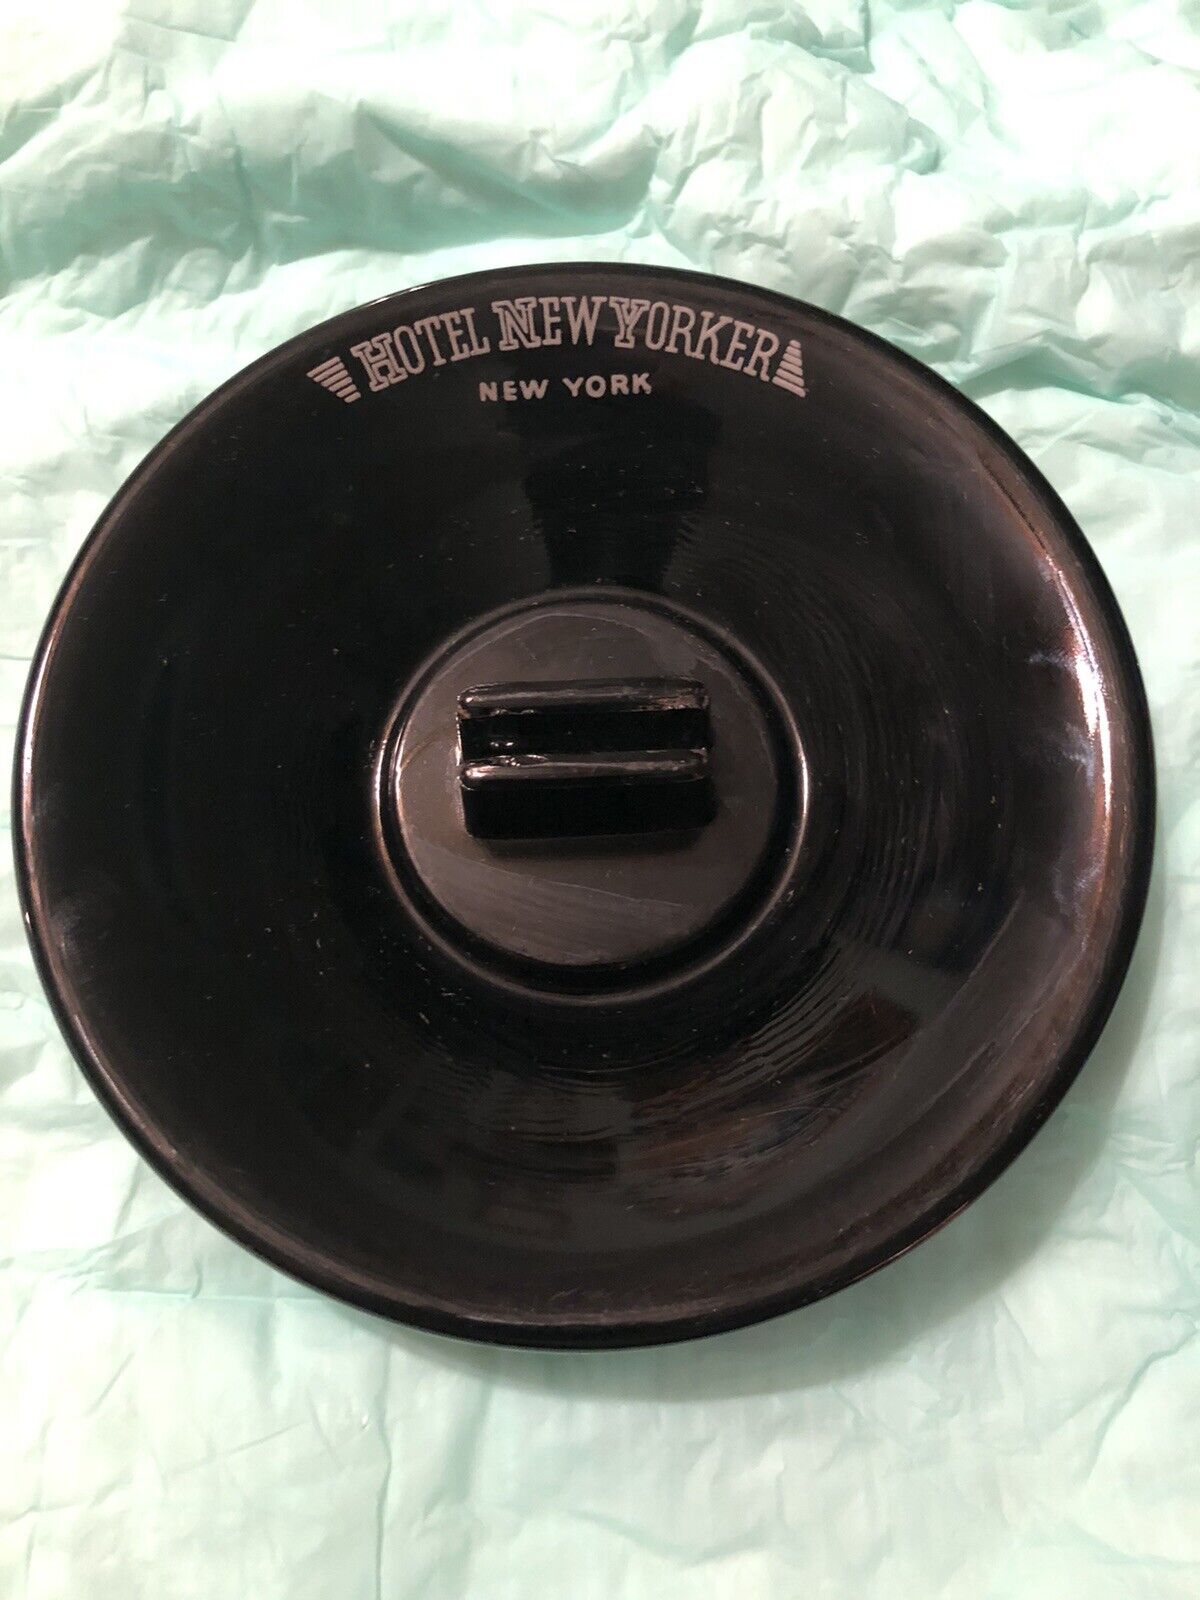 HOTEL NEW YORKER NYC BLACK GLASS ART DECO ASHTRAY WITH MATCH HOLDER CIRCA 1935